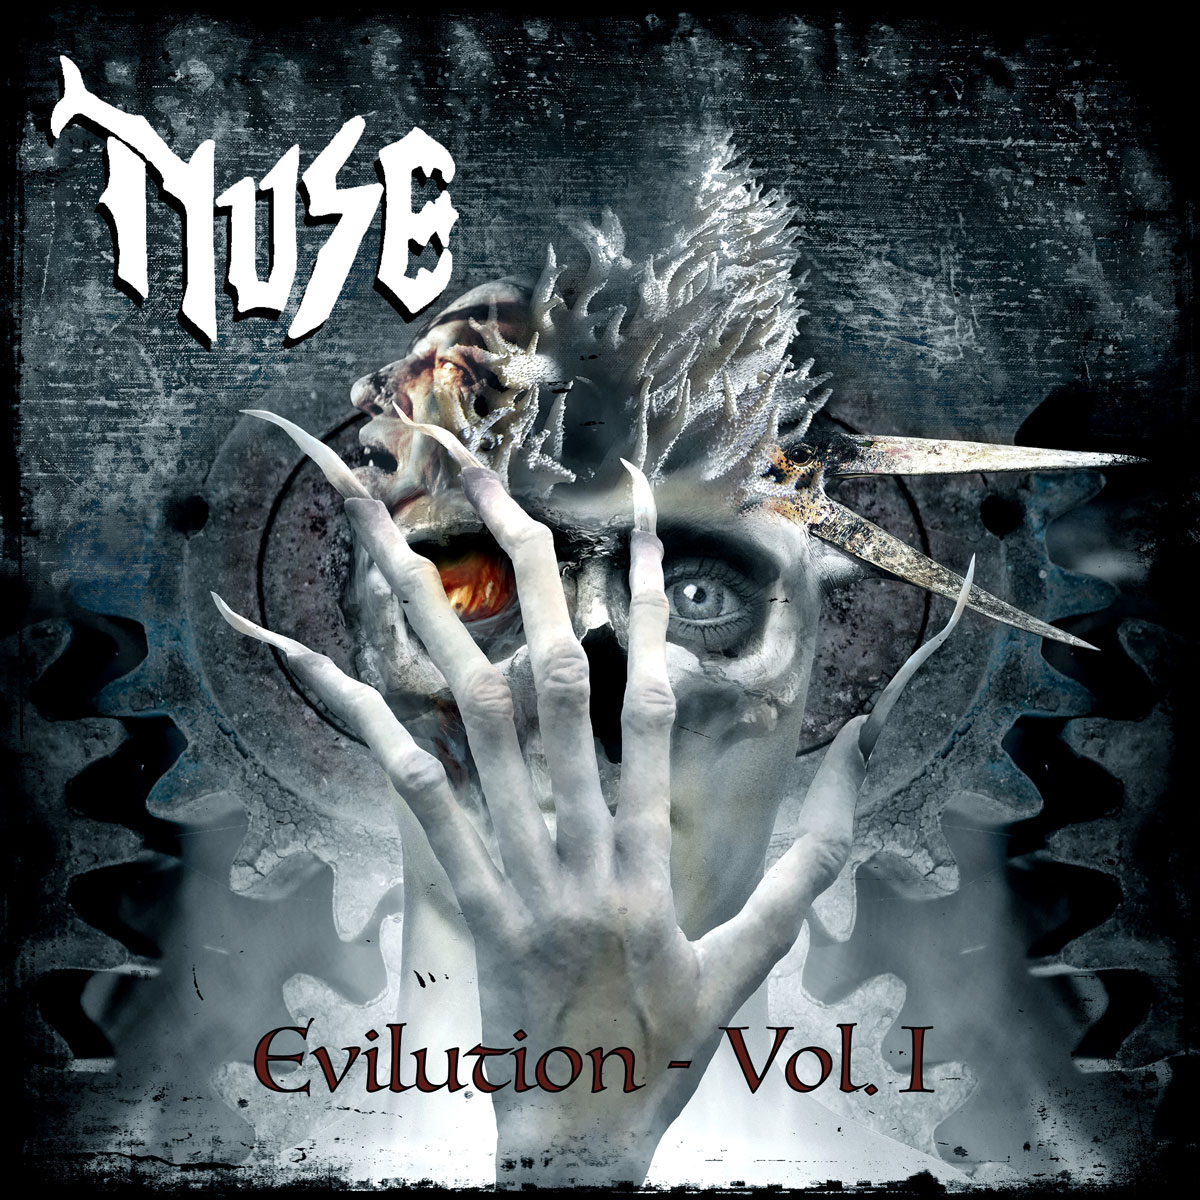 Evilution - Vol. 1